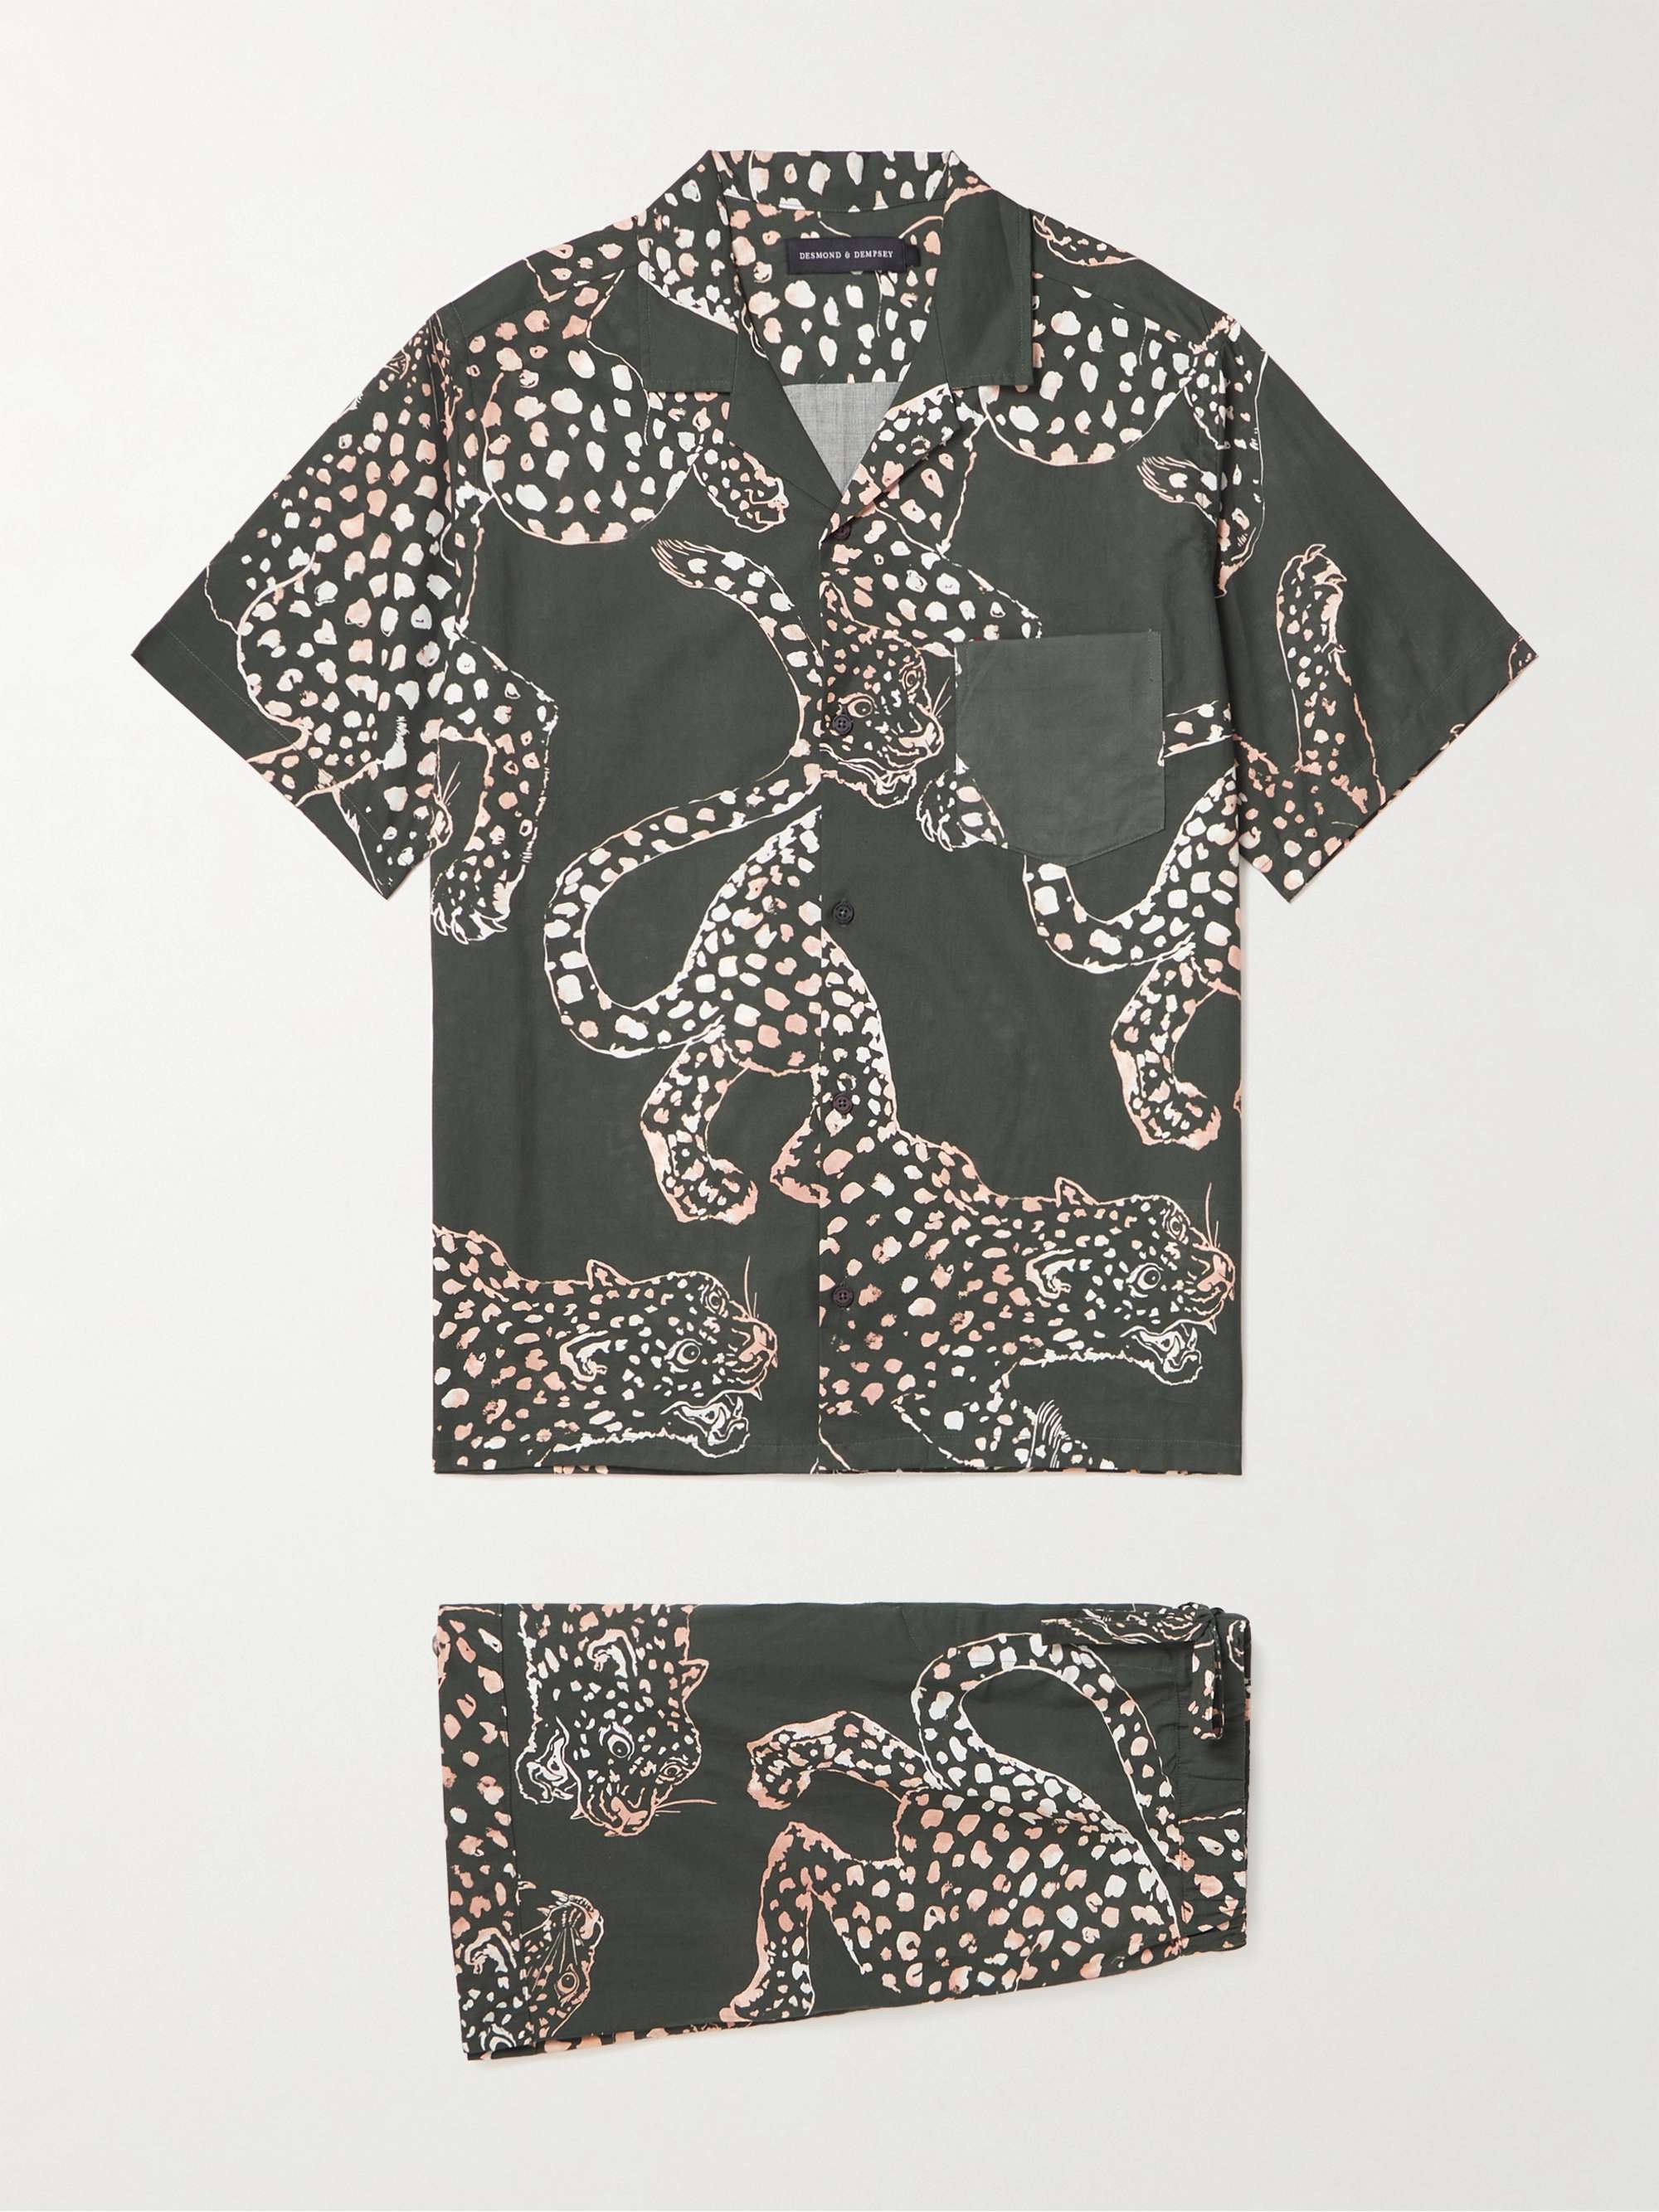 DESMOND & DEMPSEY Printed Cotton Pyjama Set